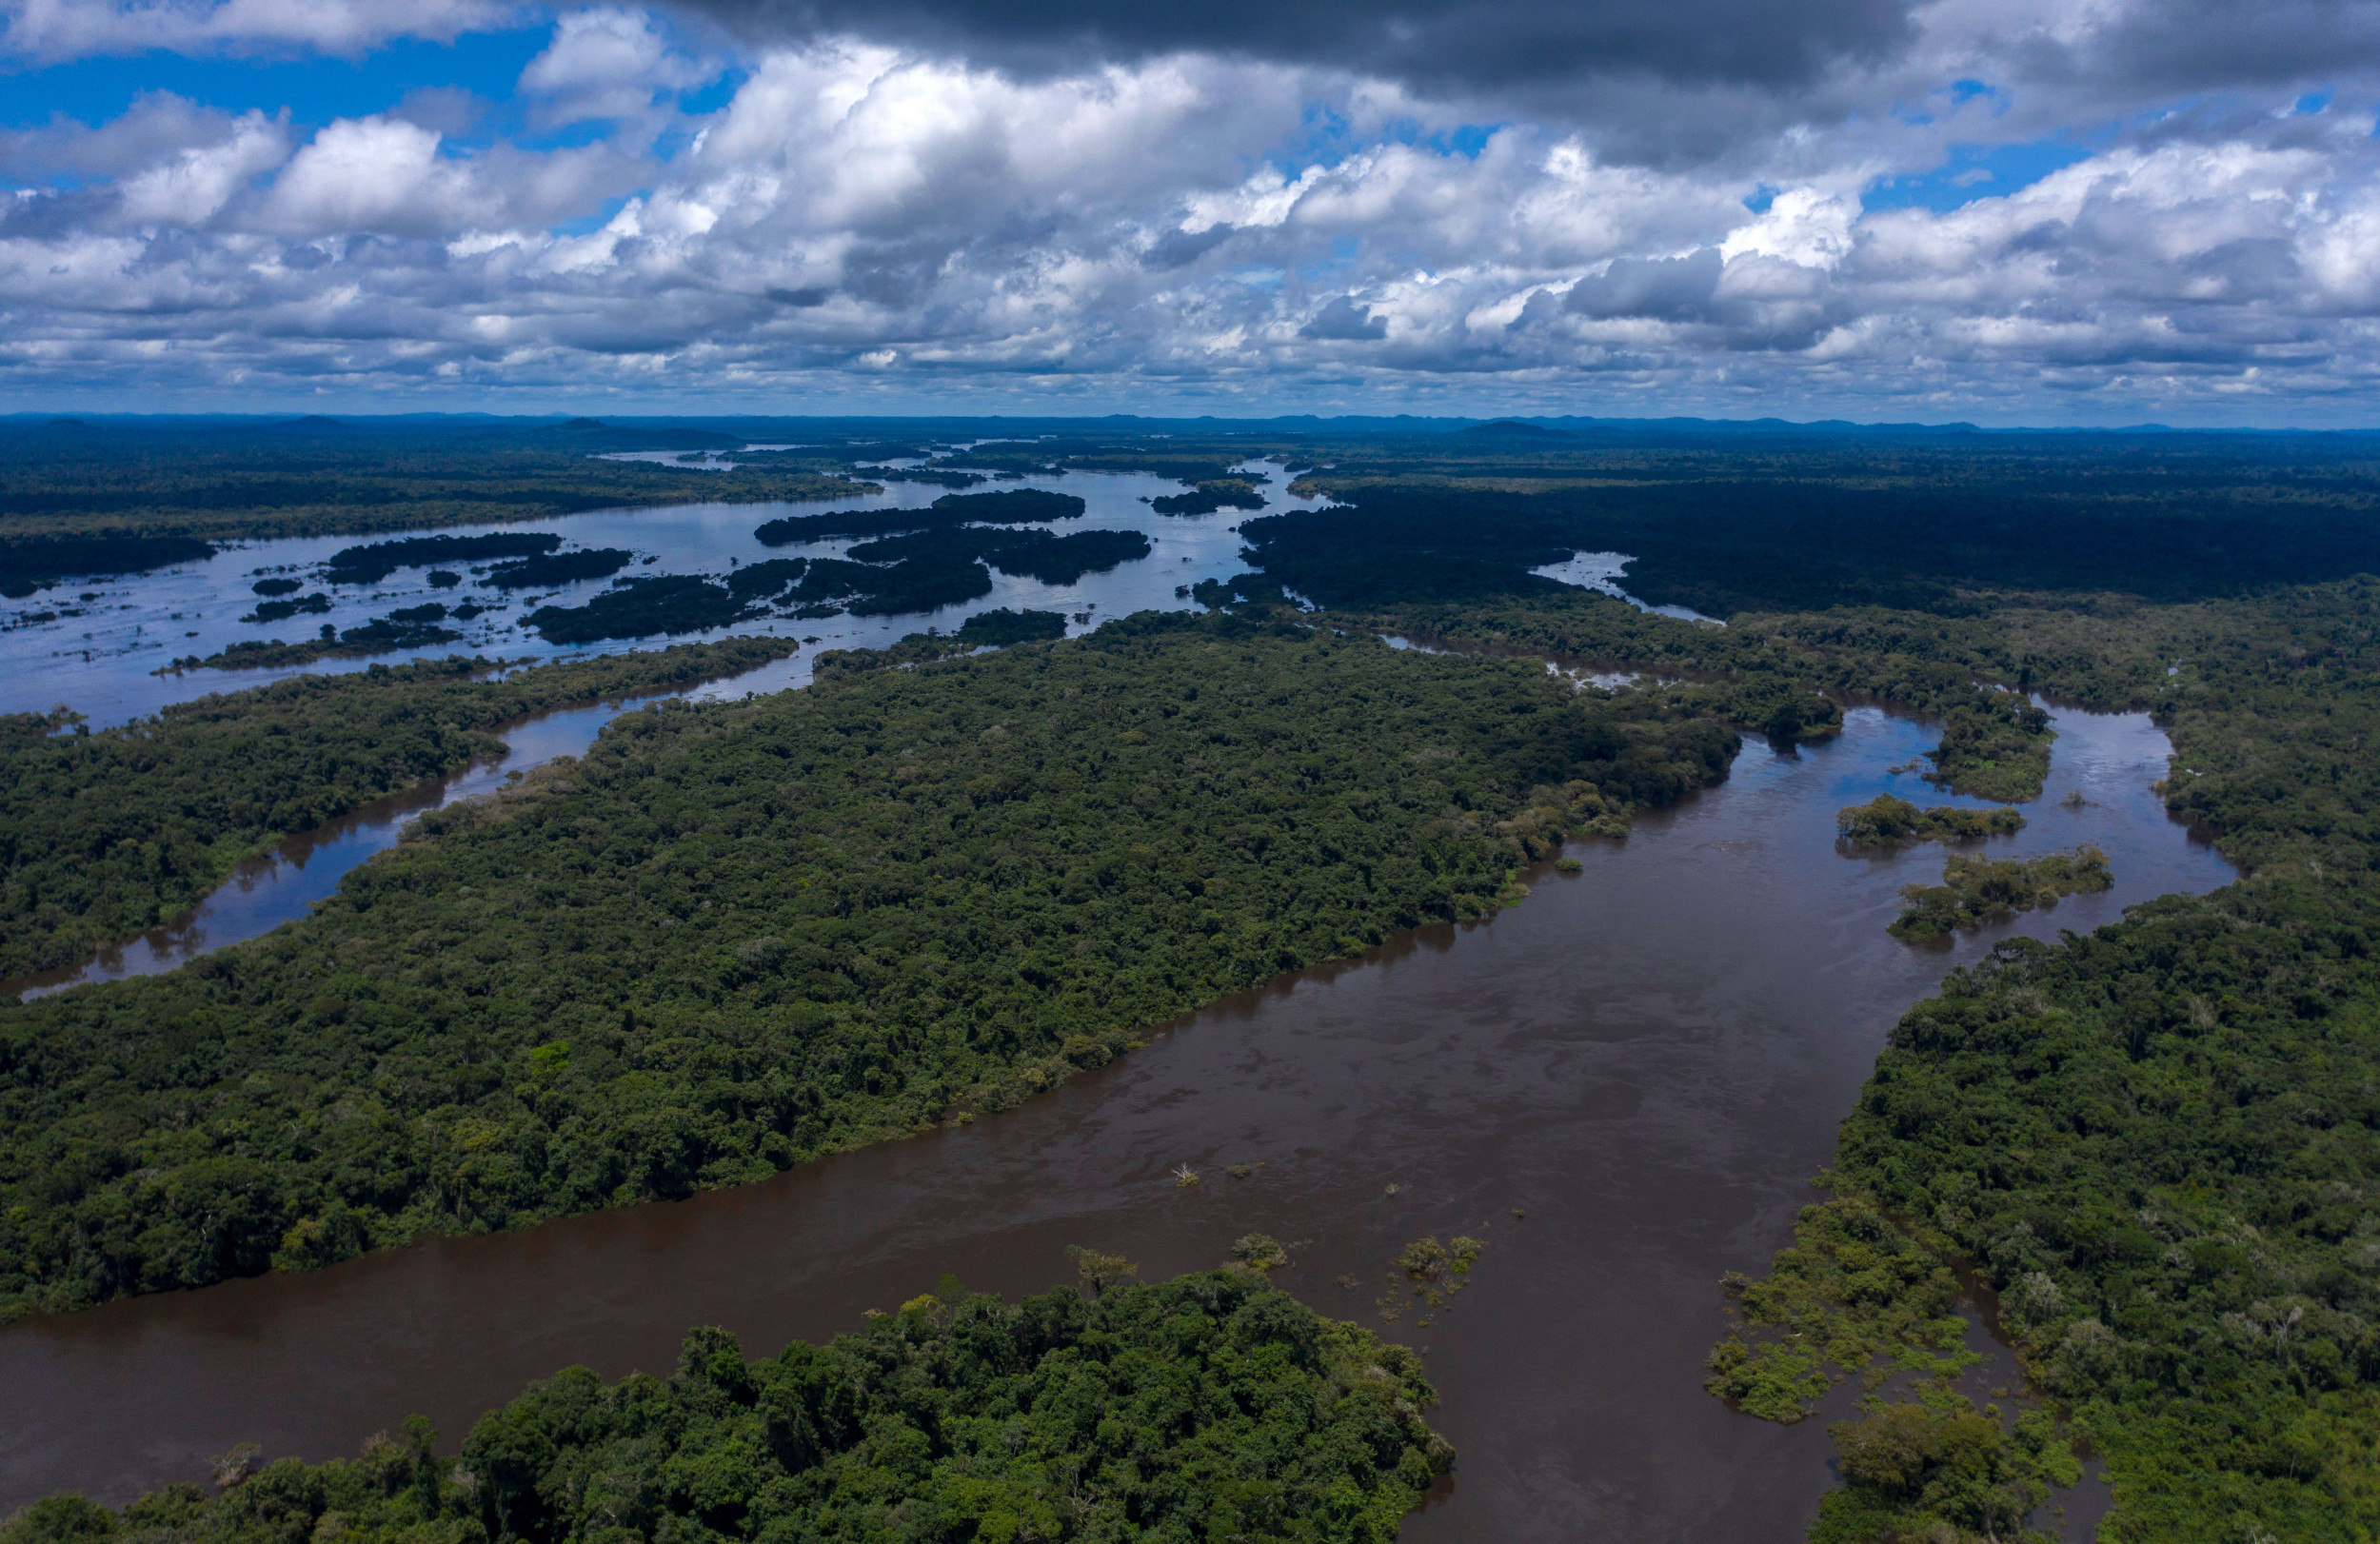 PrayforAmazonia: Photo of Amazon Rainforest Fire Show